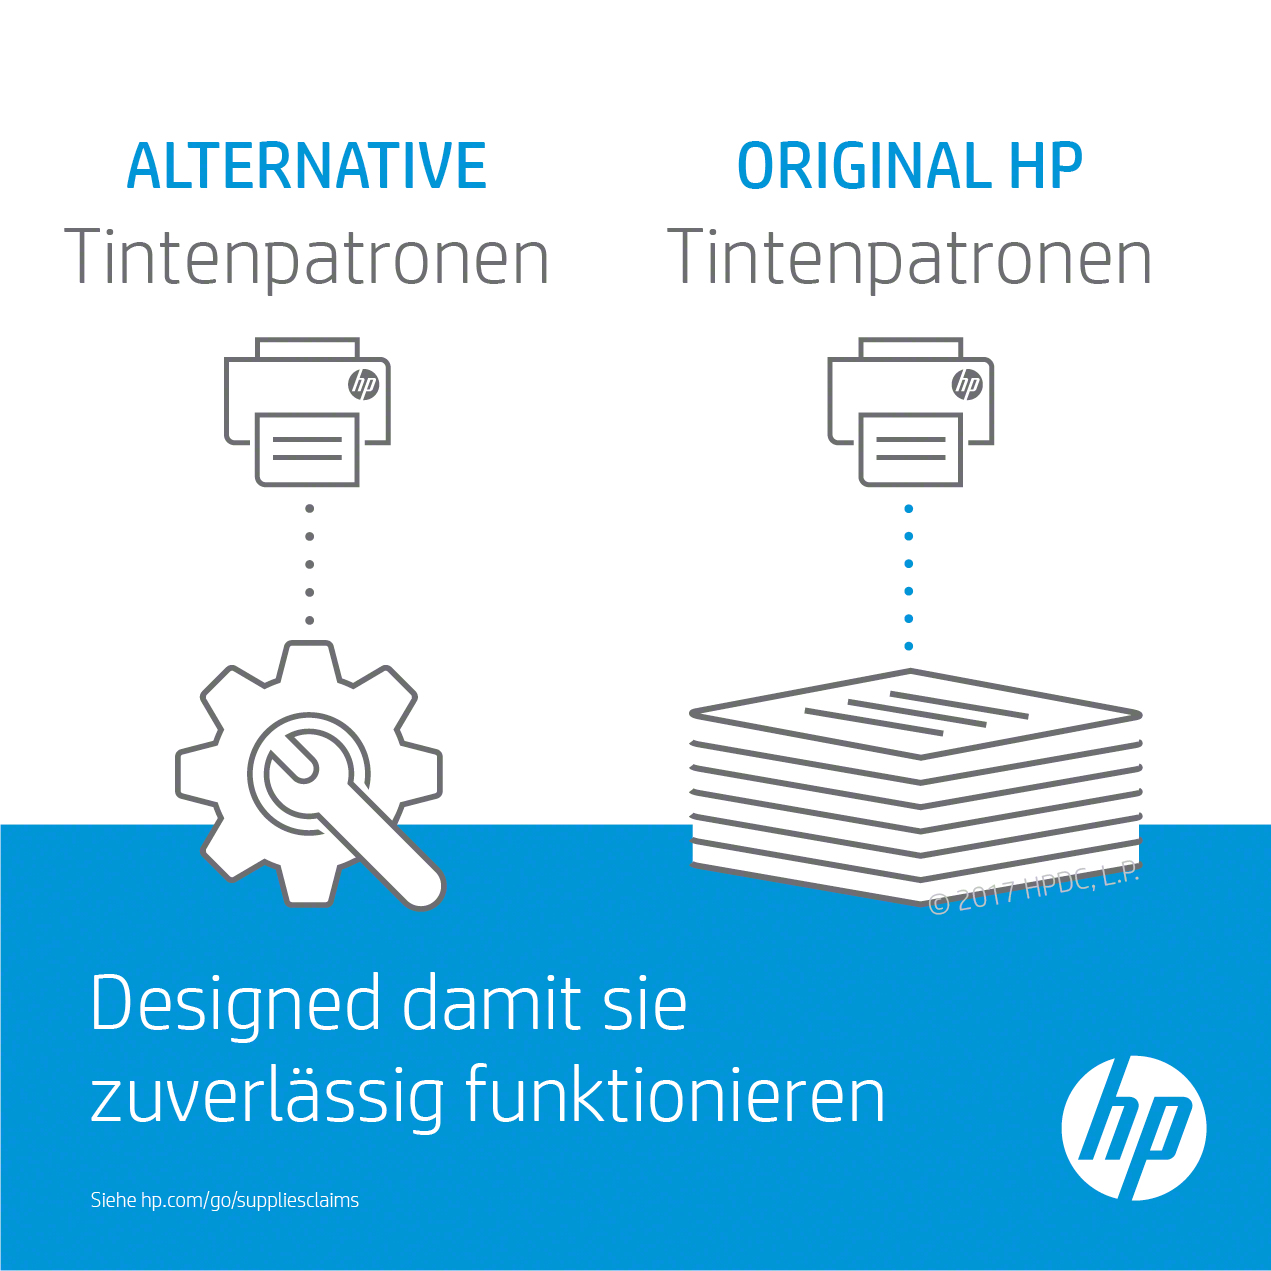 HP 953XL - Original - Tinte auf Pigmentbasis - Magenta - HP - HP OfficeJet Pro 7720 - 7730 - 7740 - 8210 - 8218 - 8710 - 8715 - 8720 - 8725 - 8730 - Tintenstrahldrucker